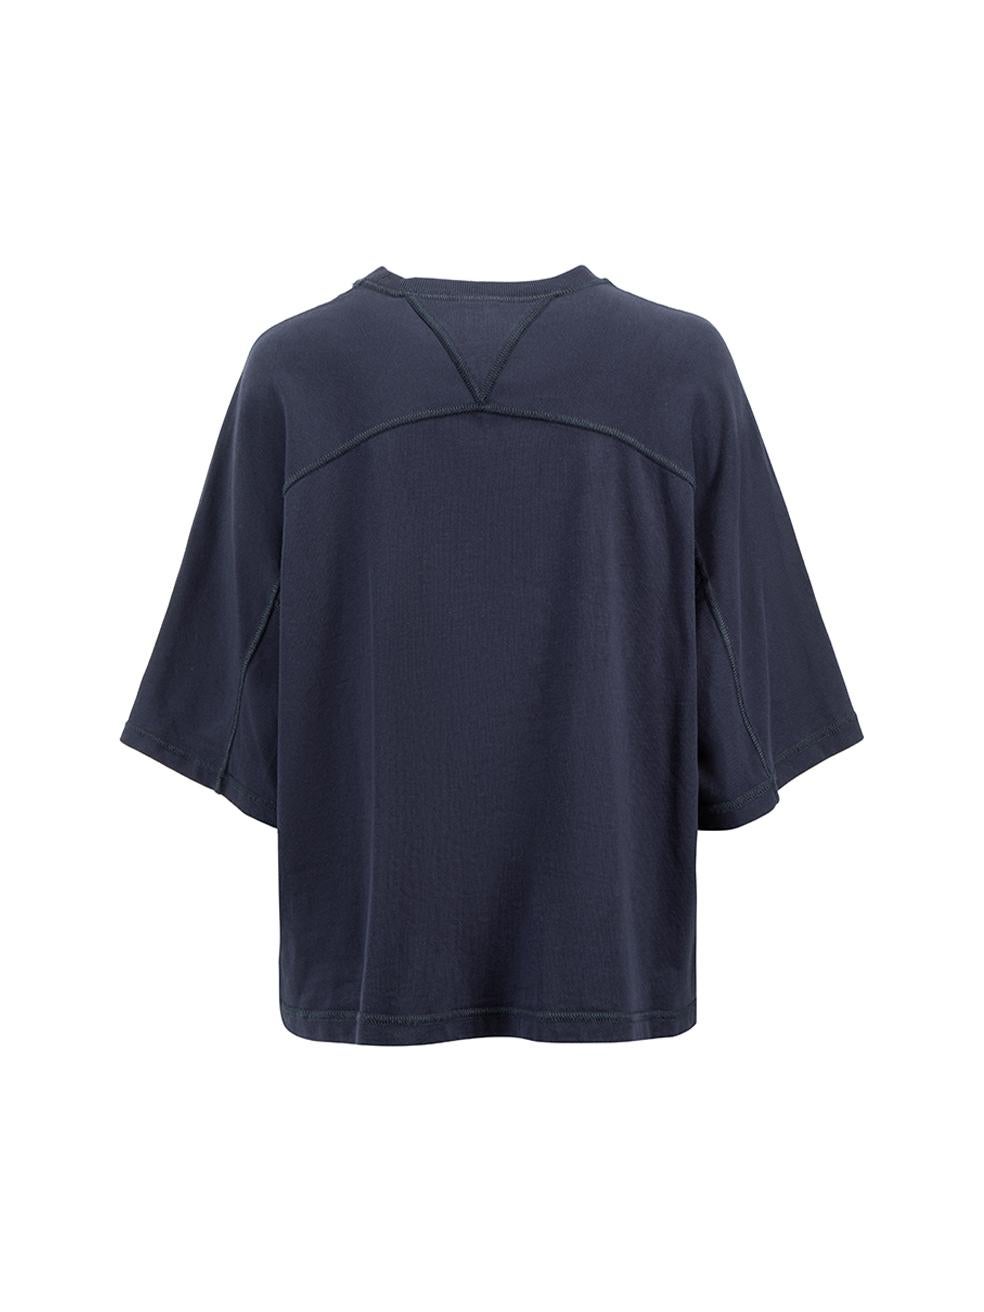 Bottega Veneta Navy Oversized T-Shirt Size XL In New Condition For Sale In London, GB